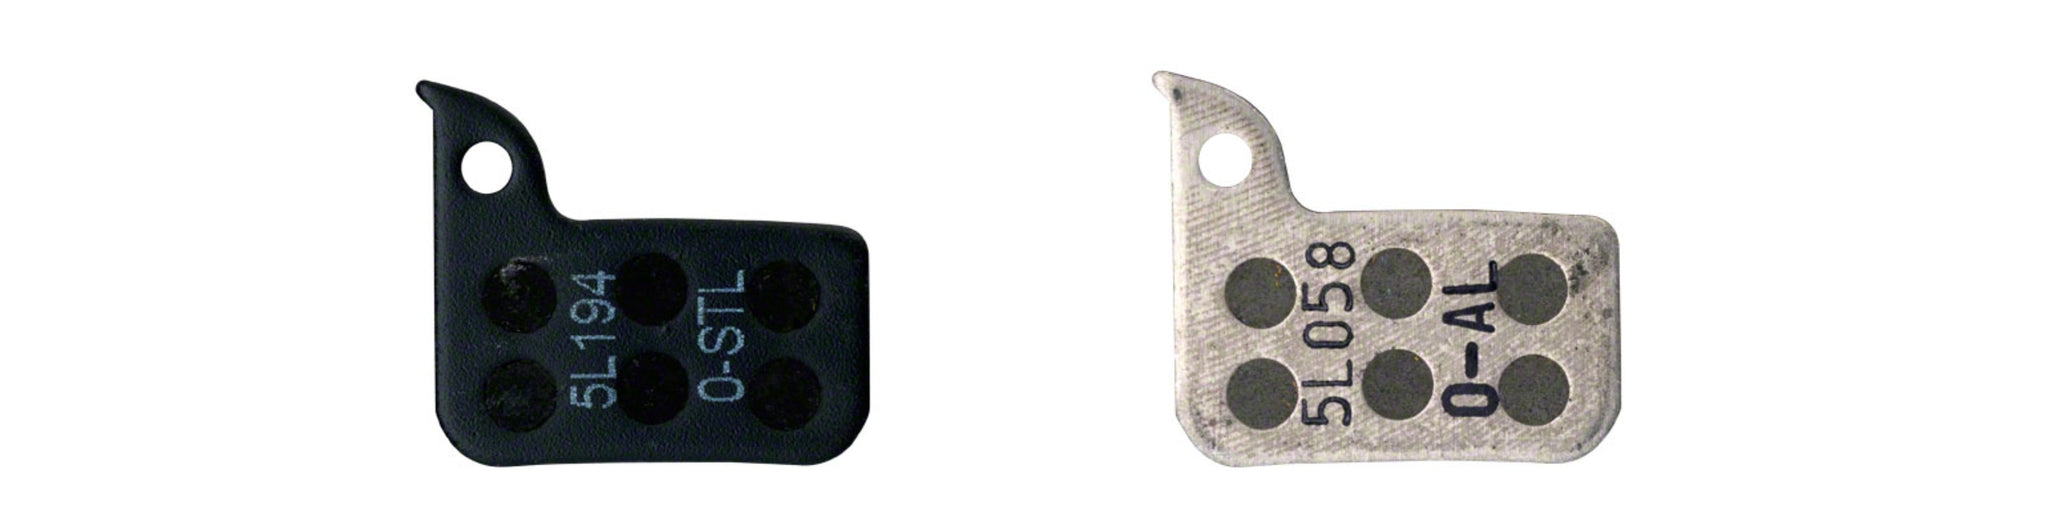 Bike disc brake pads steel vs. aluminum backing